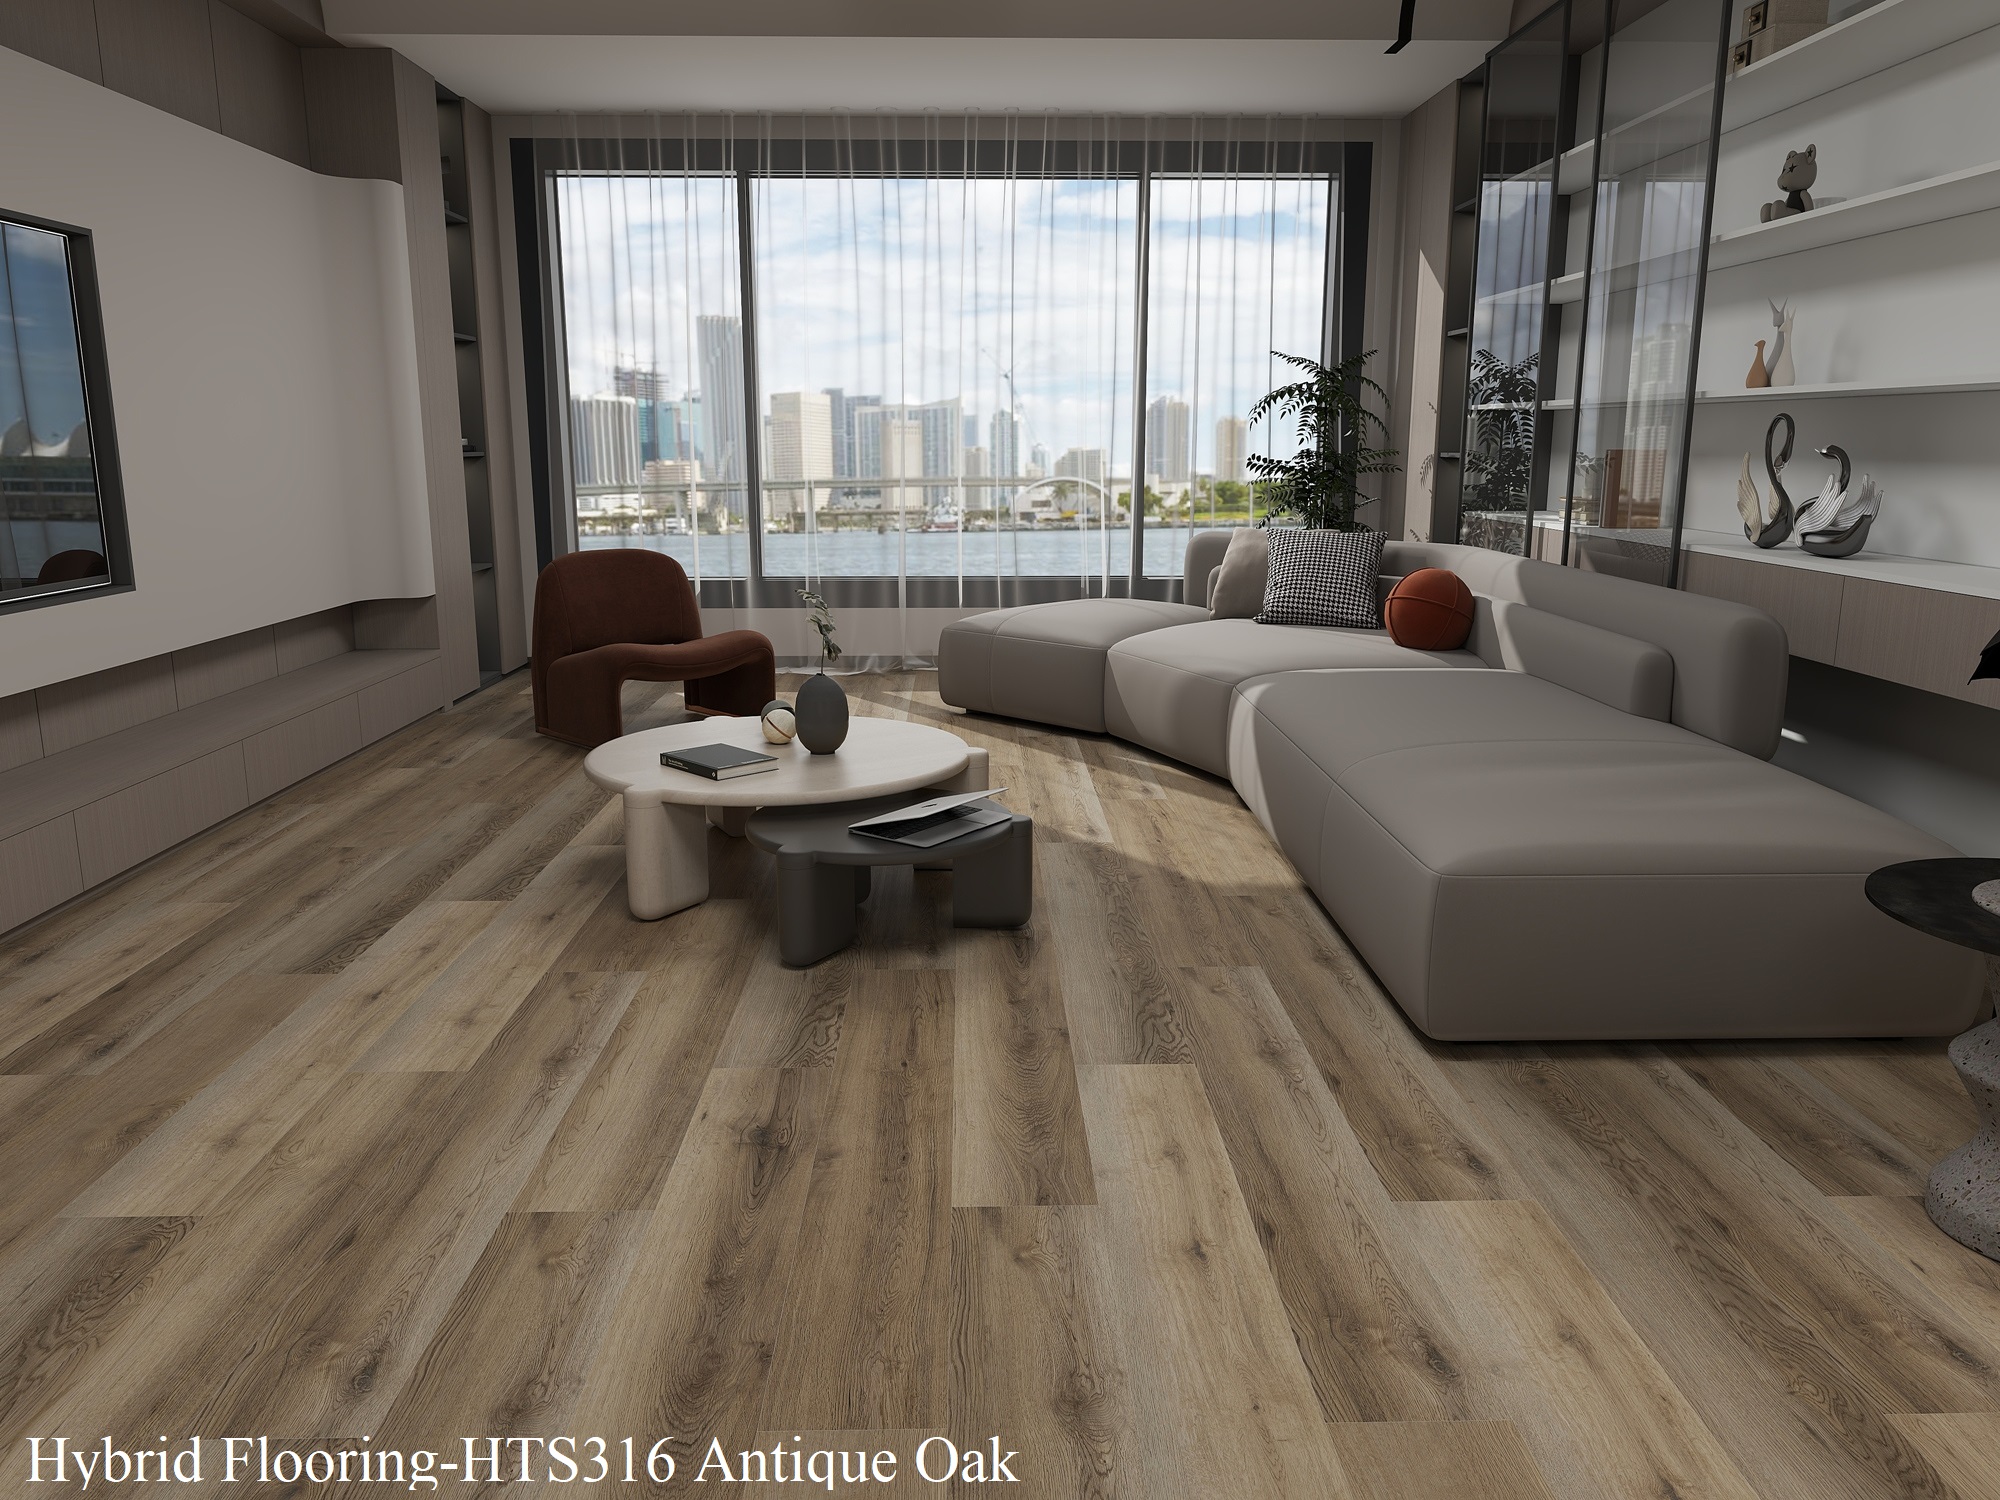 HTS316 Antique Oak hybrid flooring